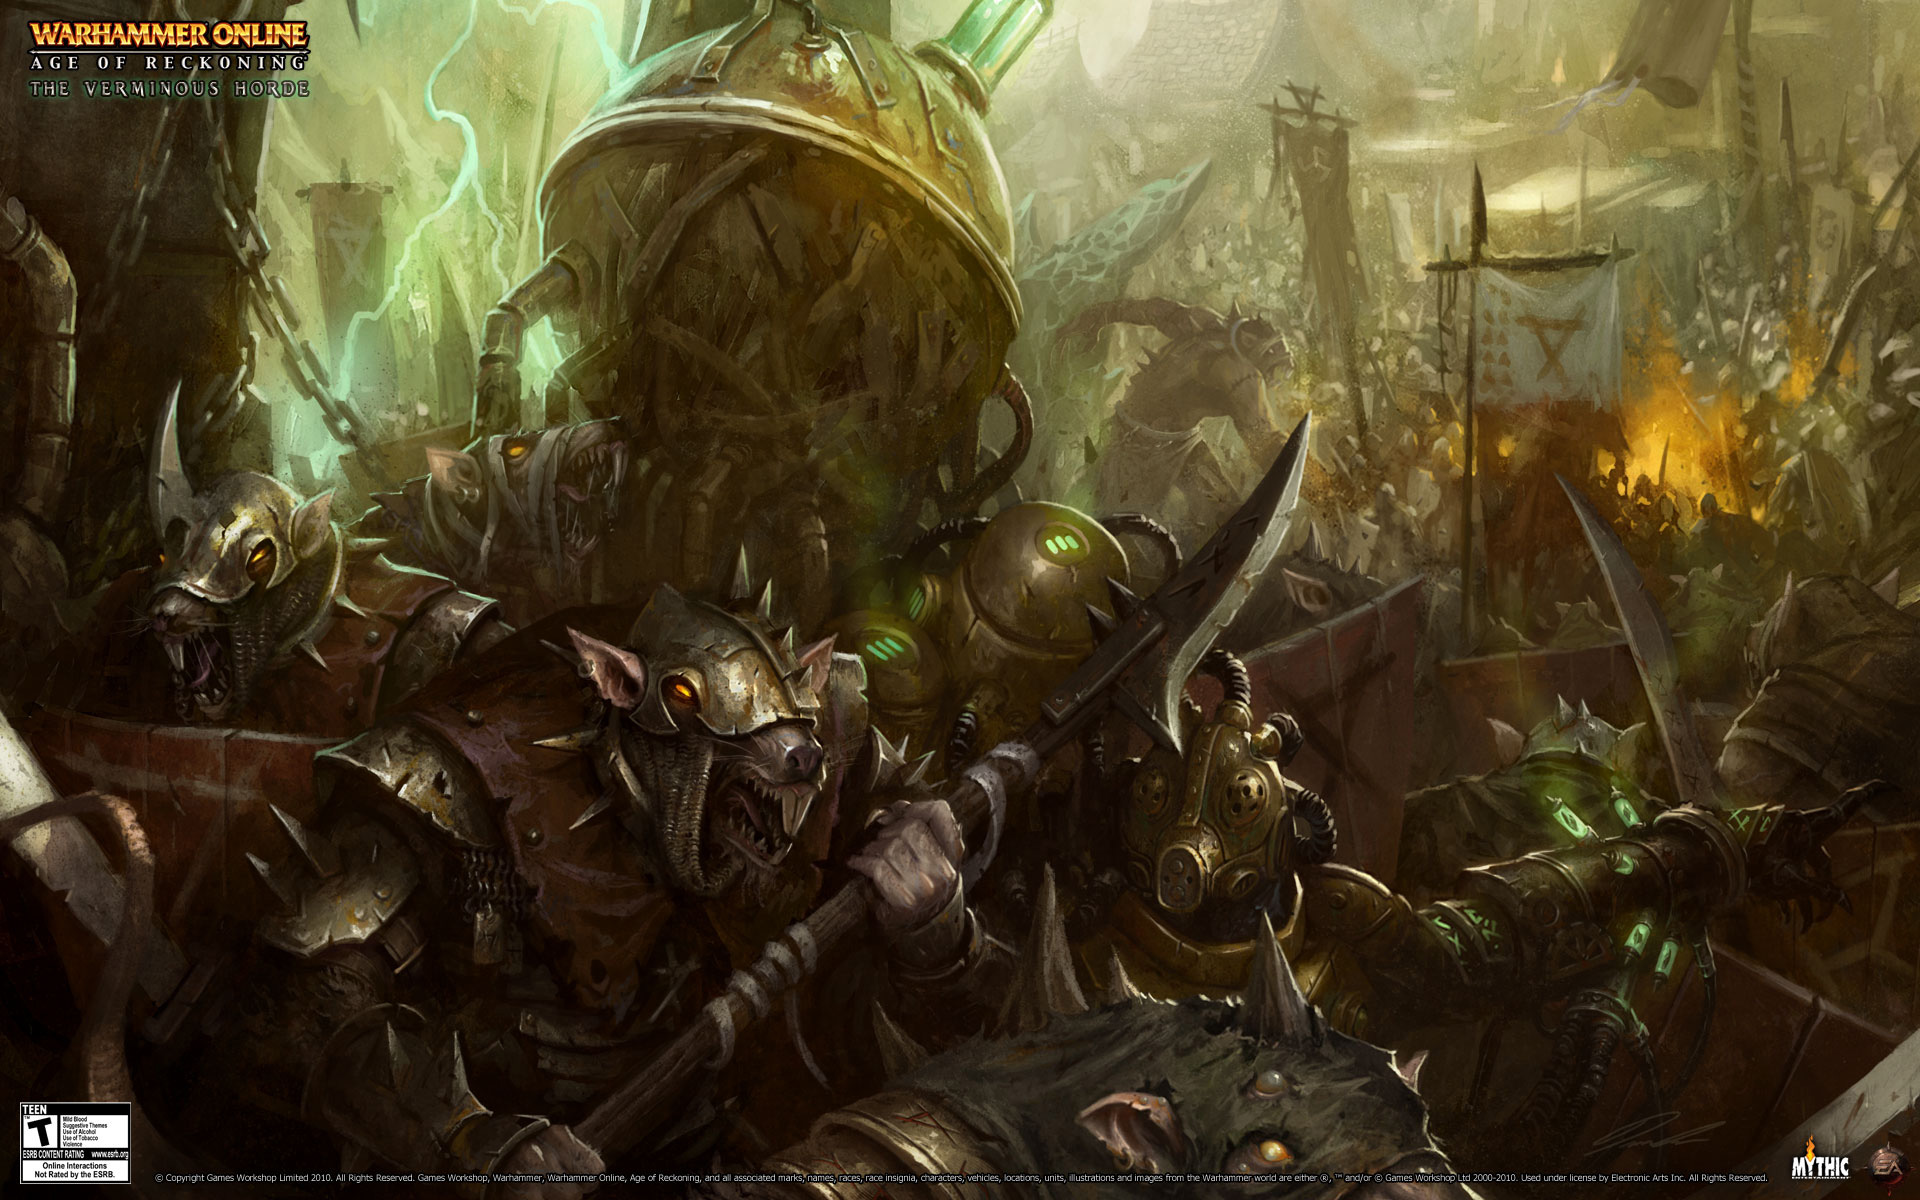 Warhammer Online Age Of Reckoning HD Wallpaper Background Image